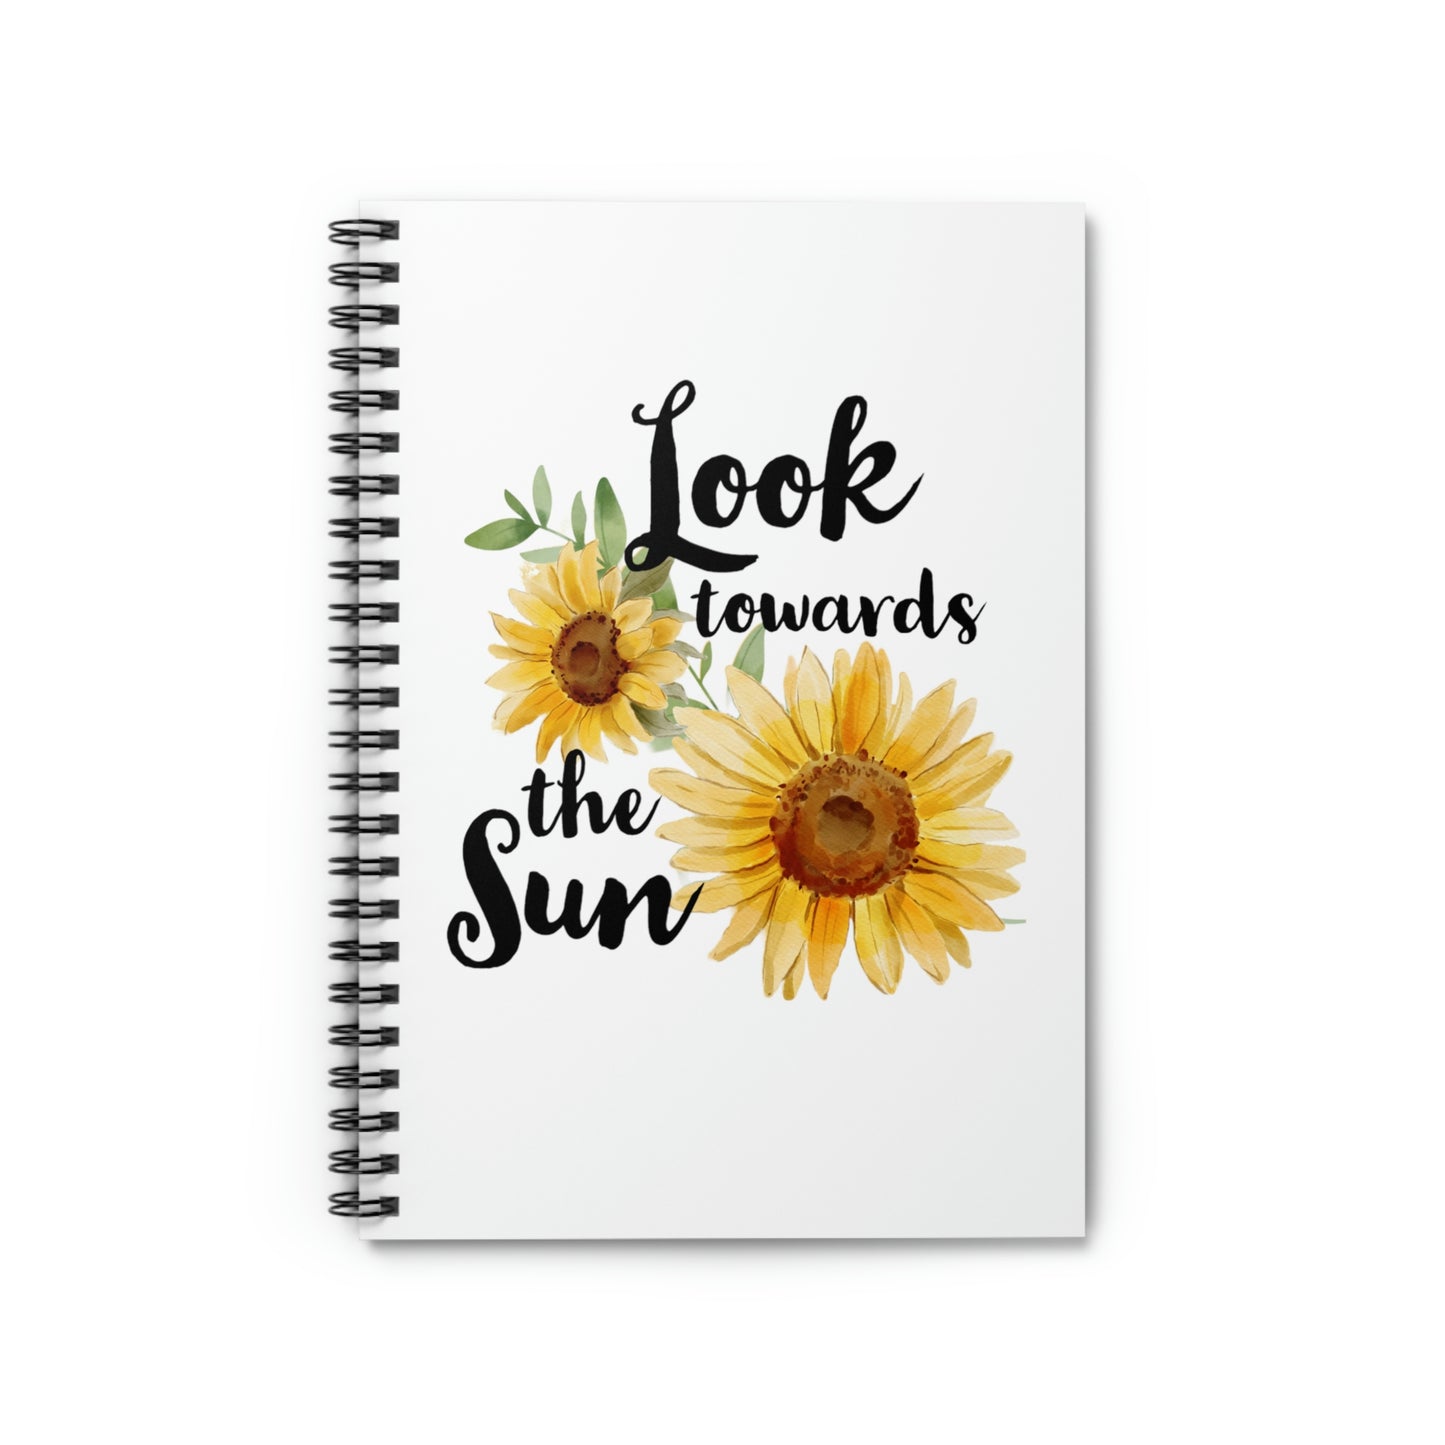 Look Towards the Sun(flower) Spiral Notebook - Ruled Line